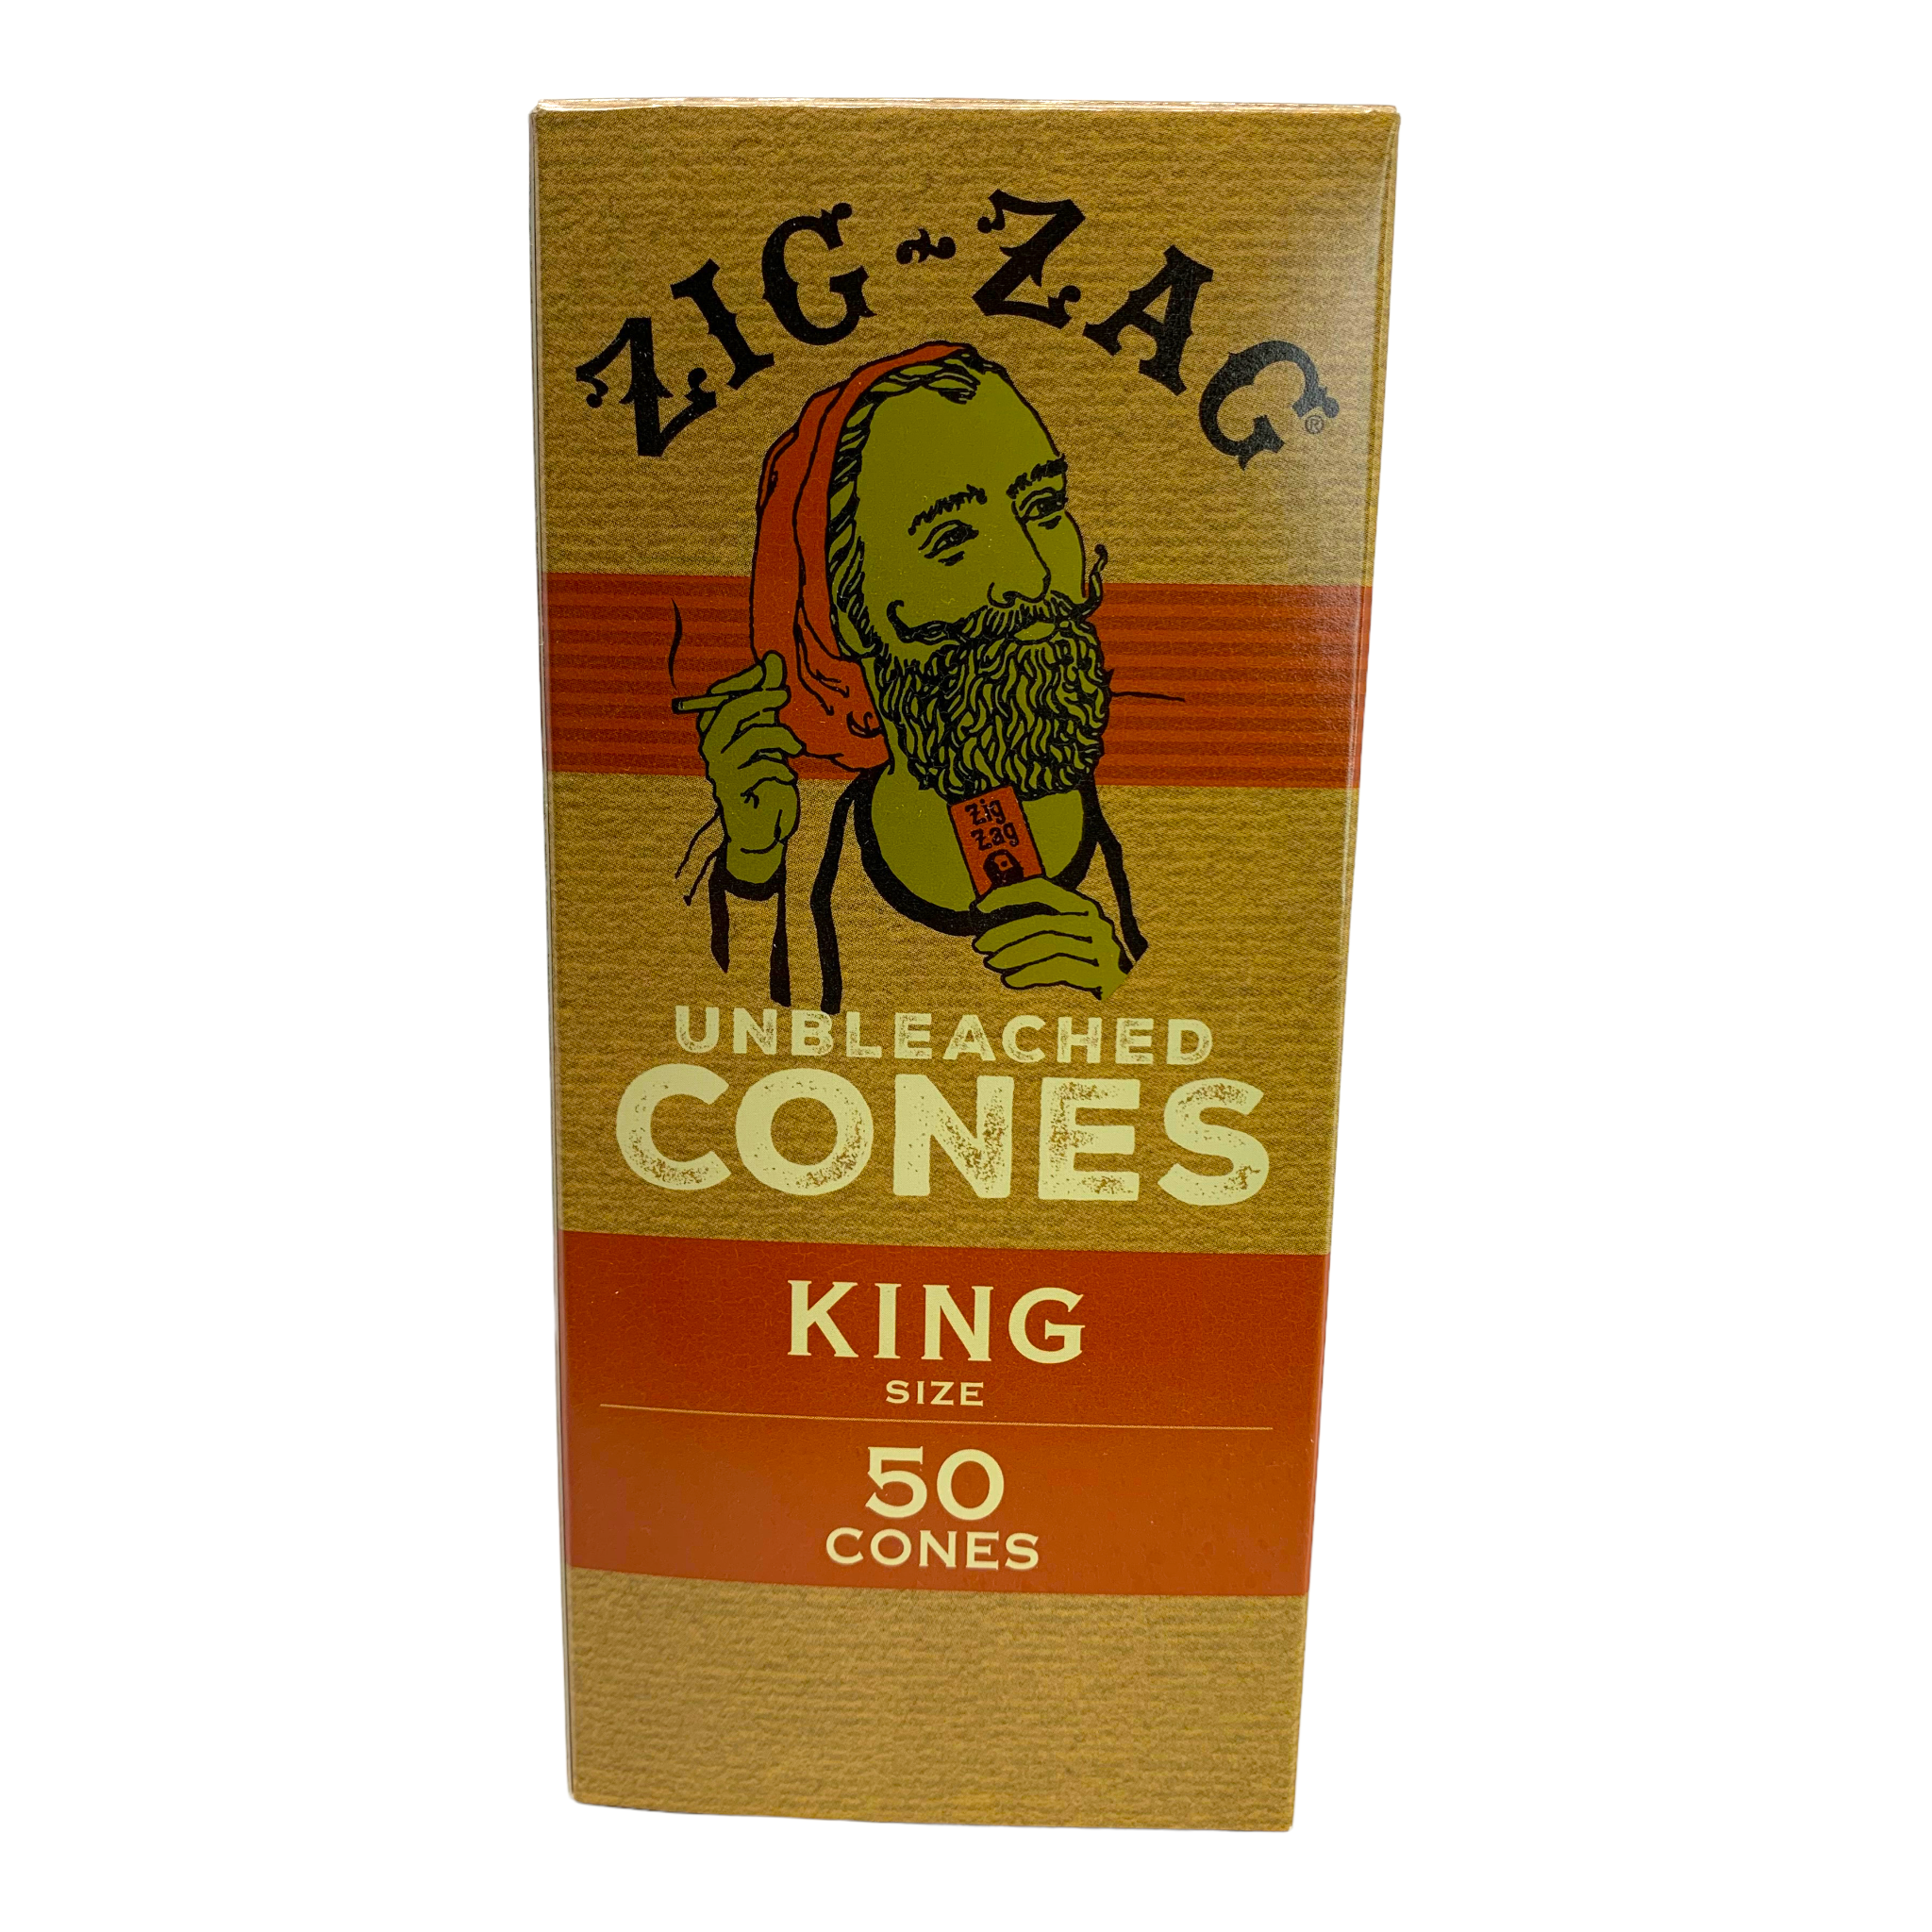 Zig Zag Cones